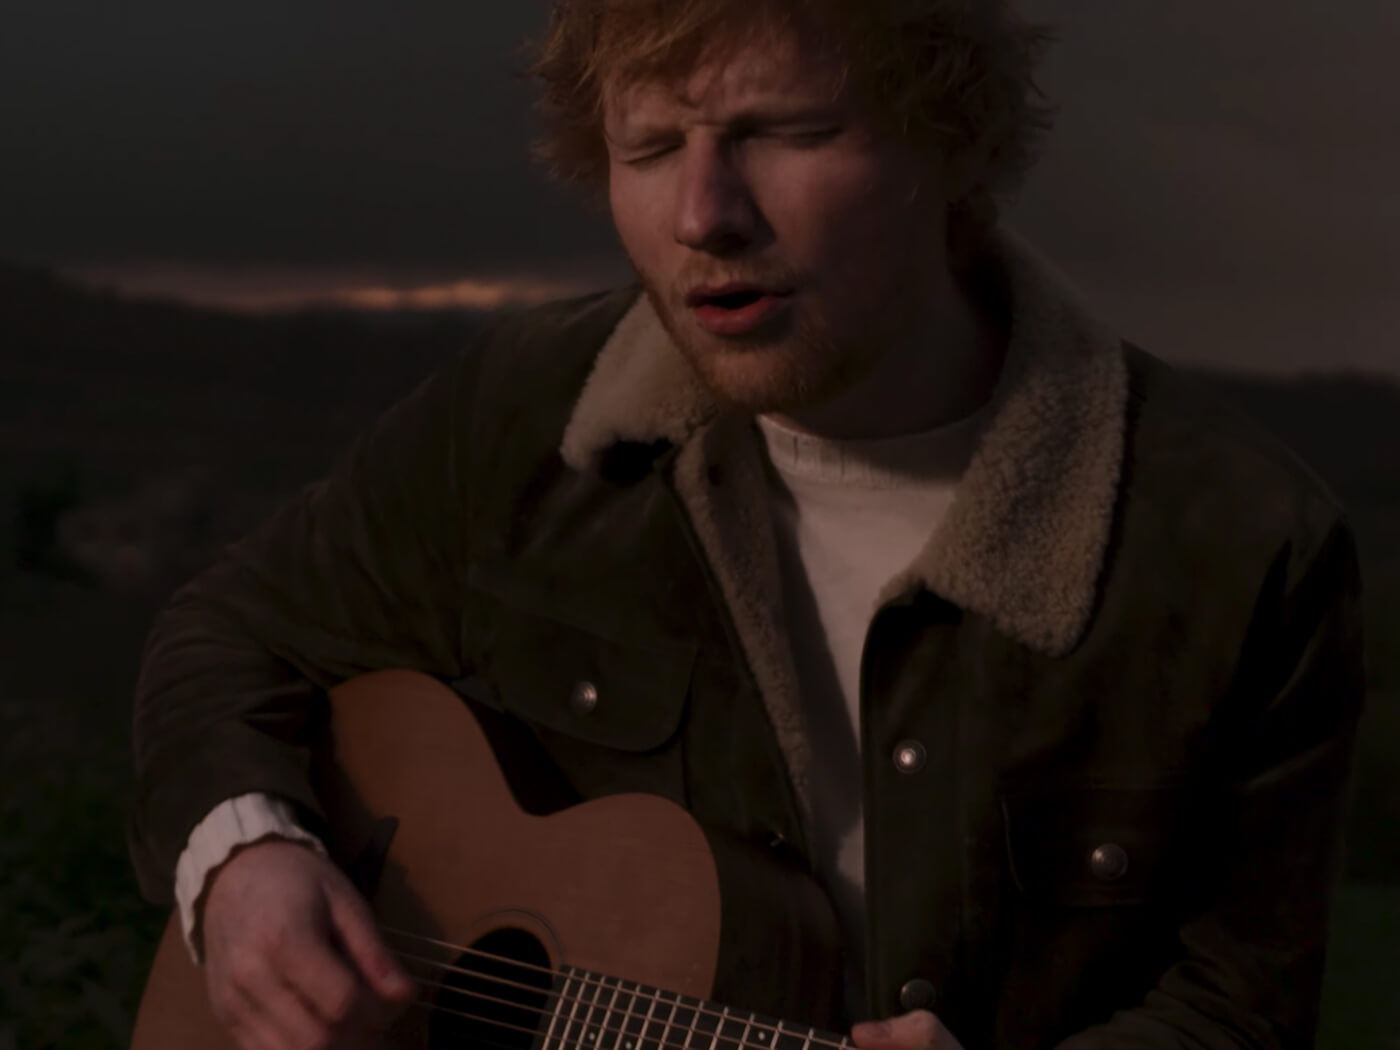 Ed Sheeran The Afterglow via YouTube